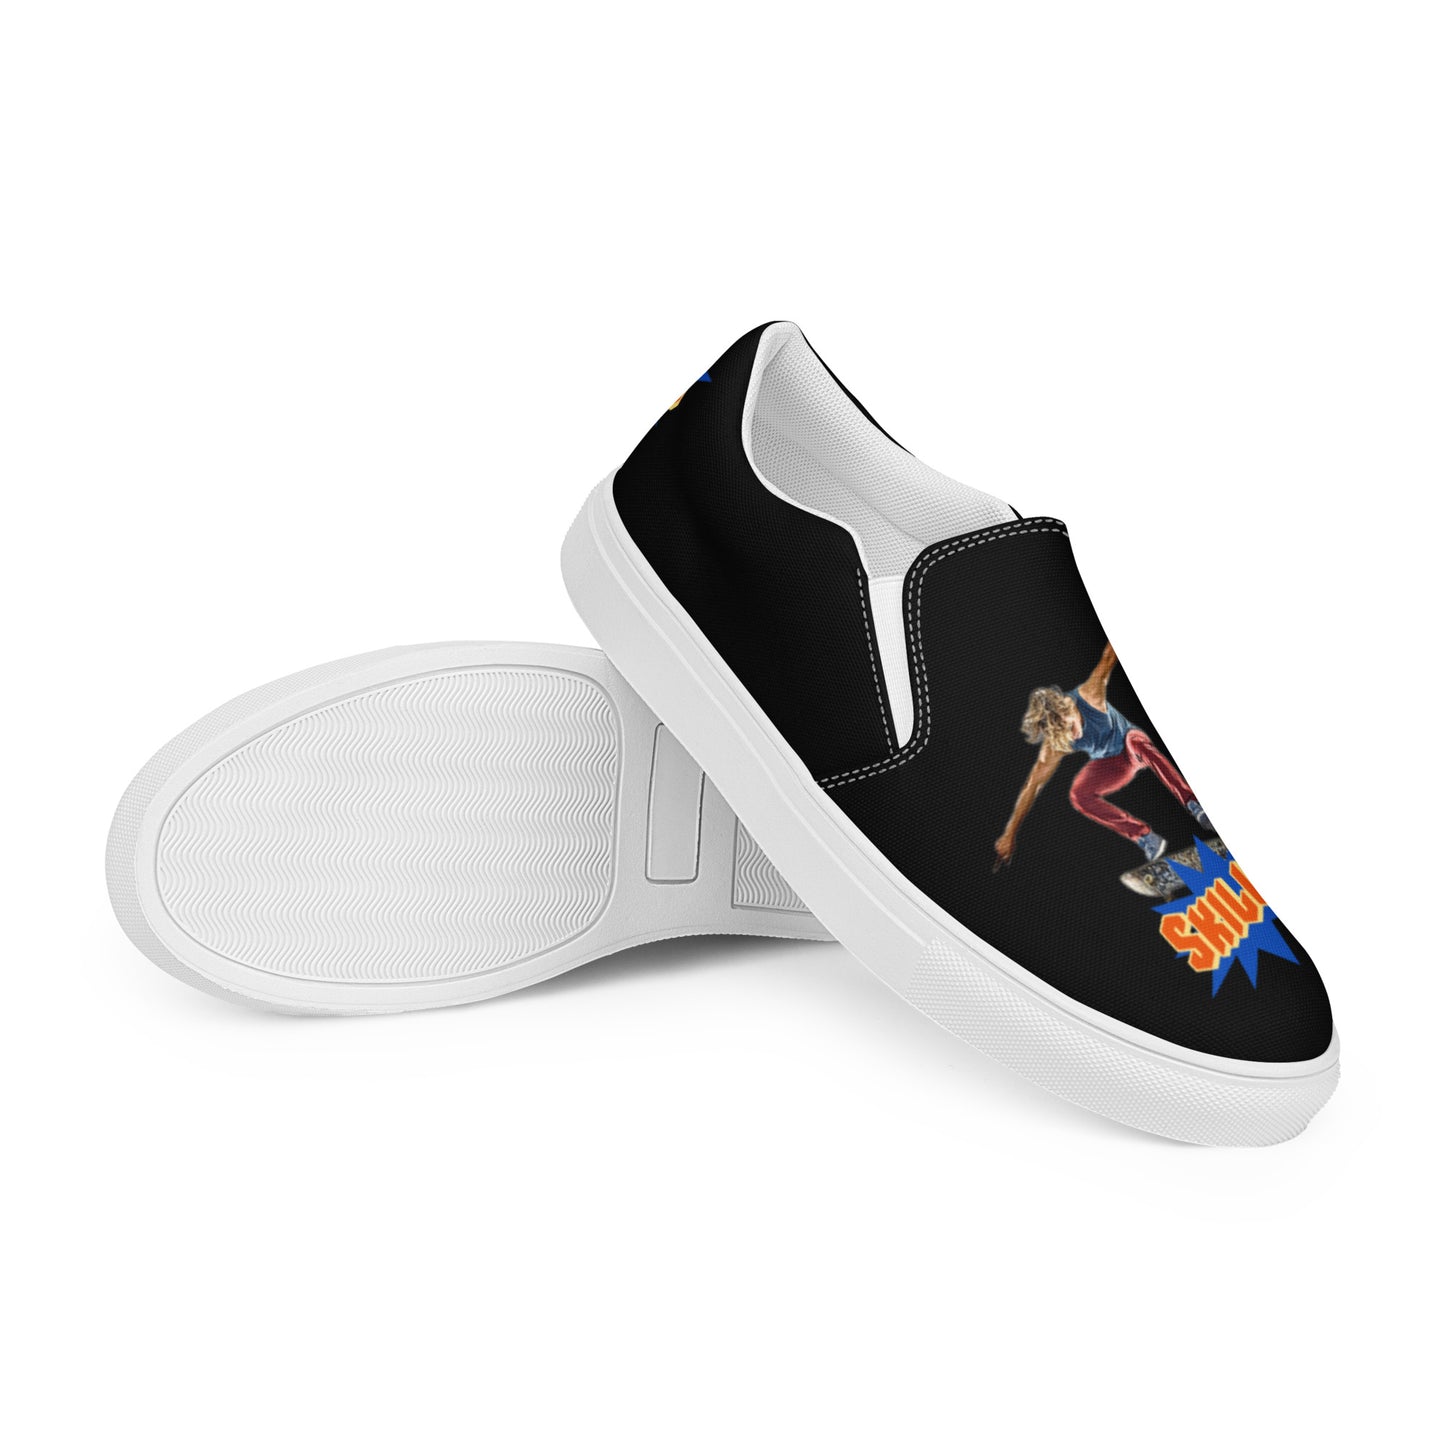 SKILLS Skateboard 954 Signature Men’s slip-on canvas shoes